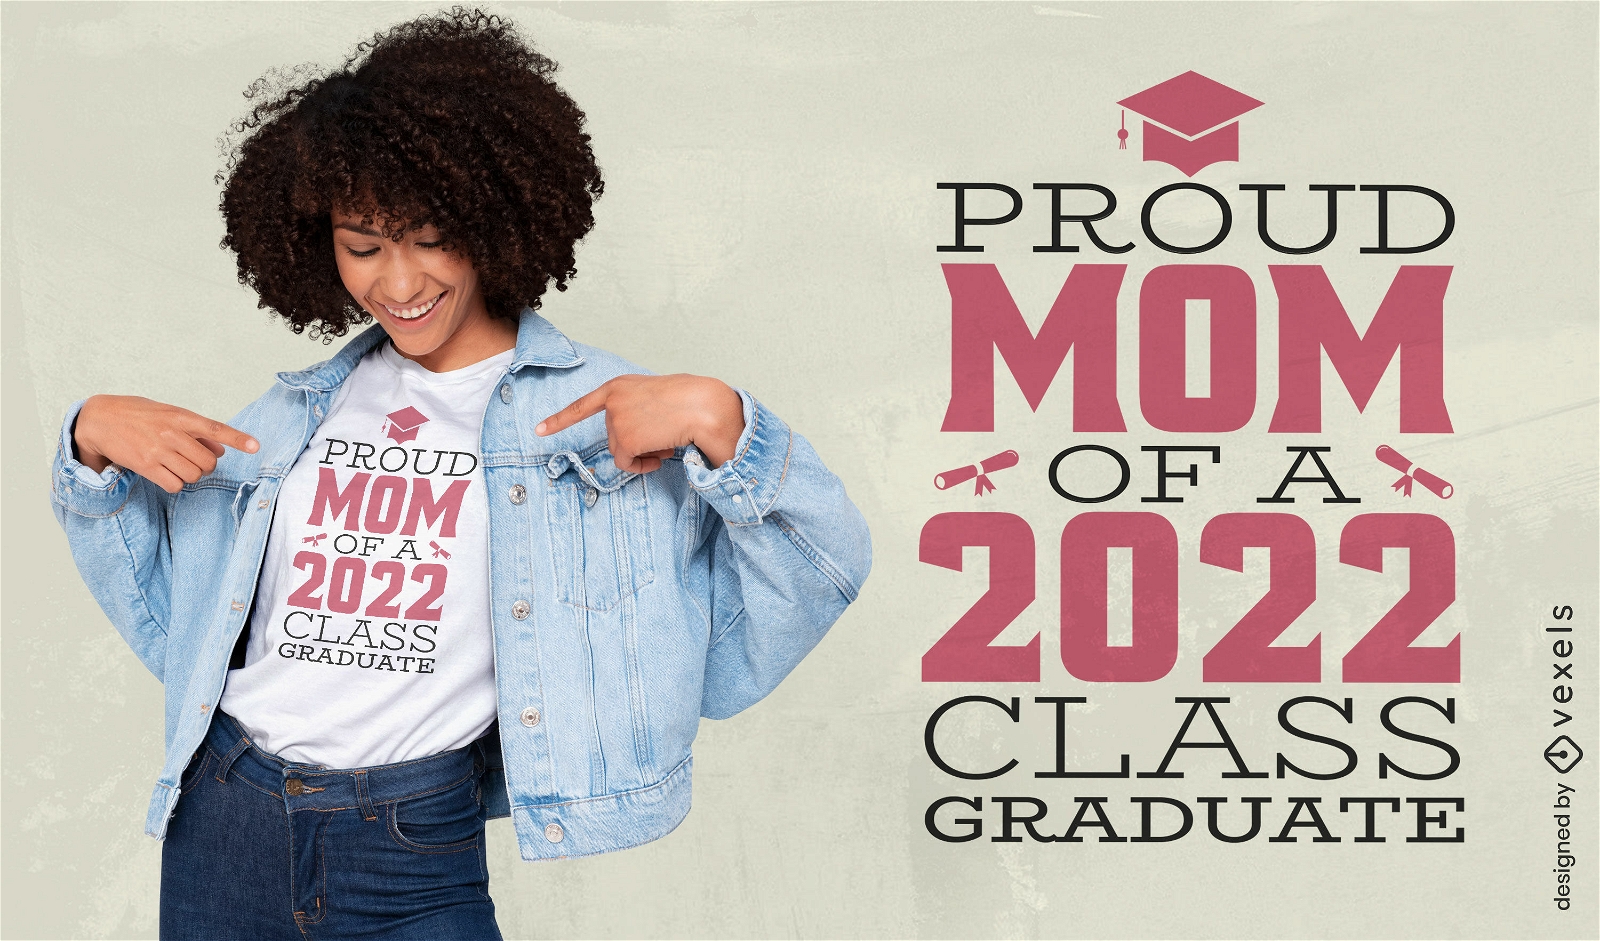 Proud mom class graduate t-shirt design